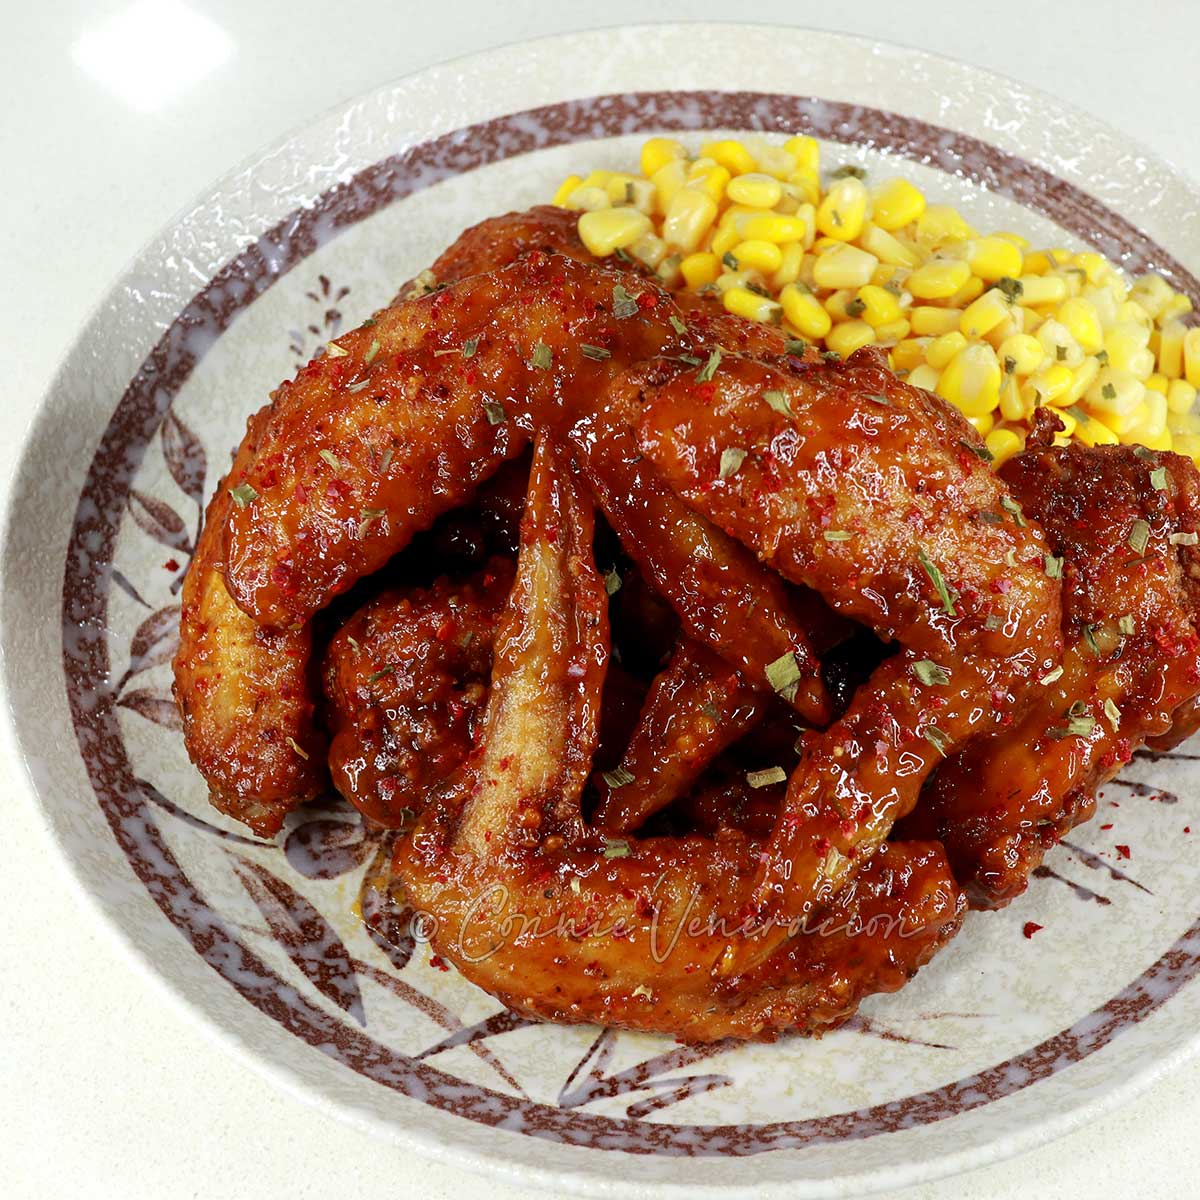 Cajun fried chicken wings on serving plate